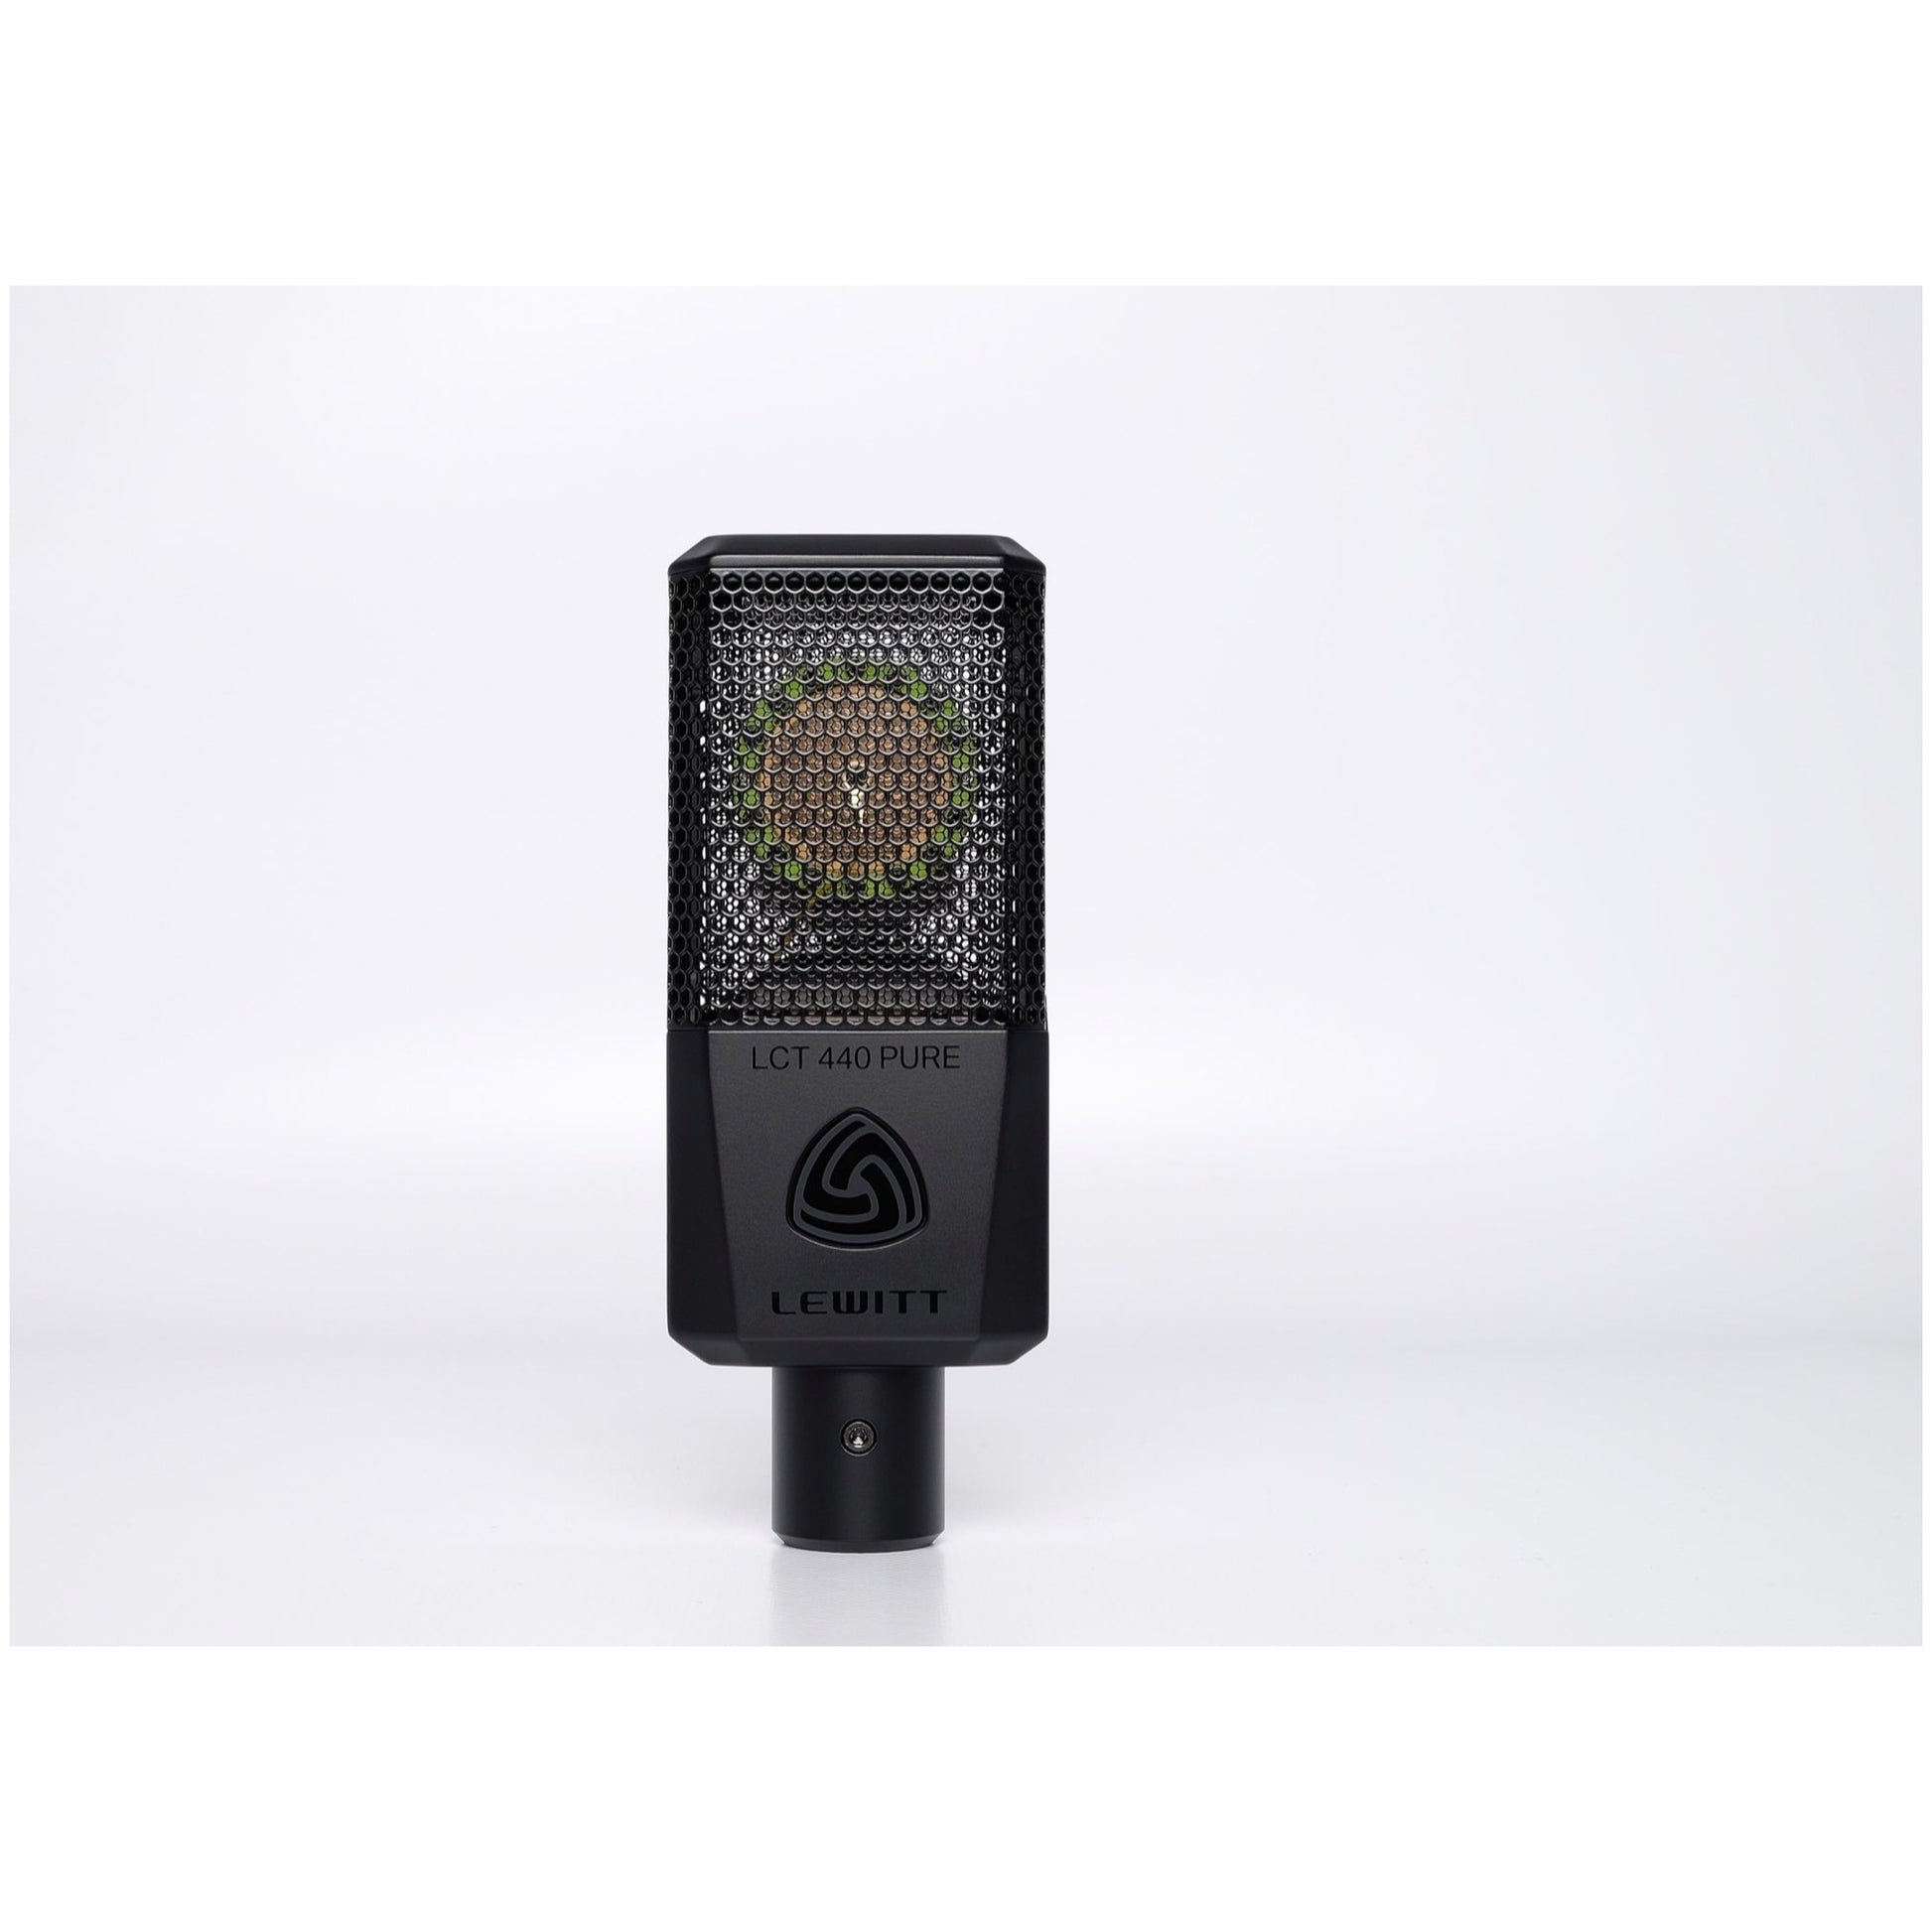 Lewitt LCT 440 PURE Large-Diaphragm Condenser Microphone